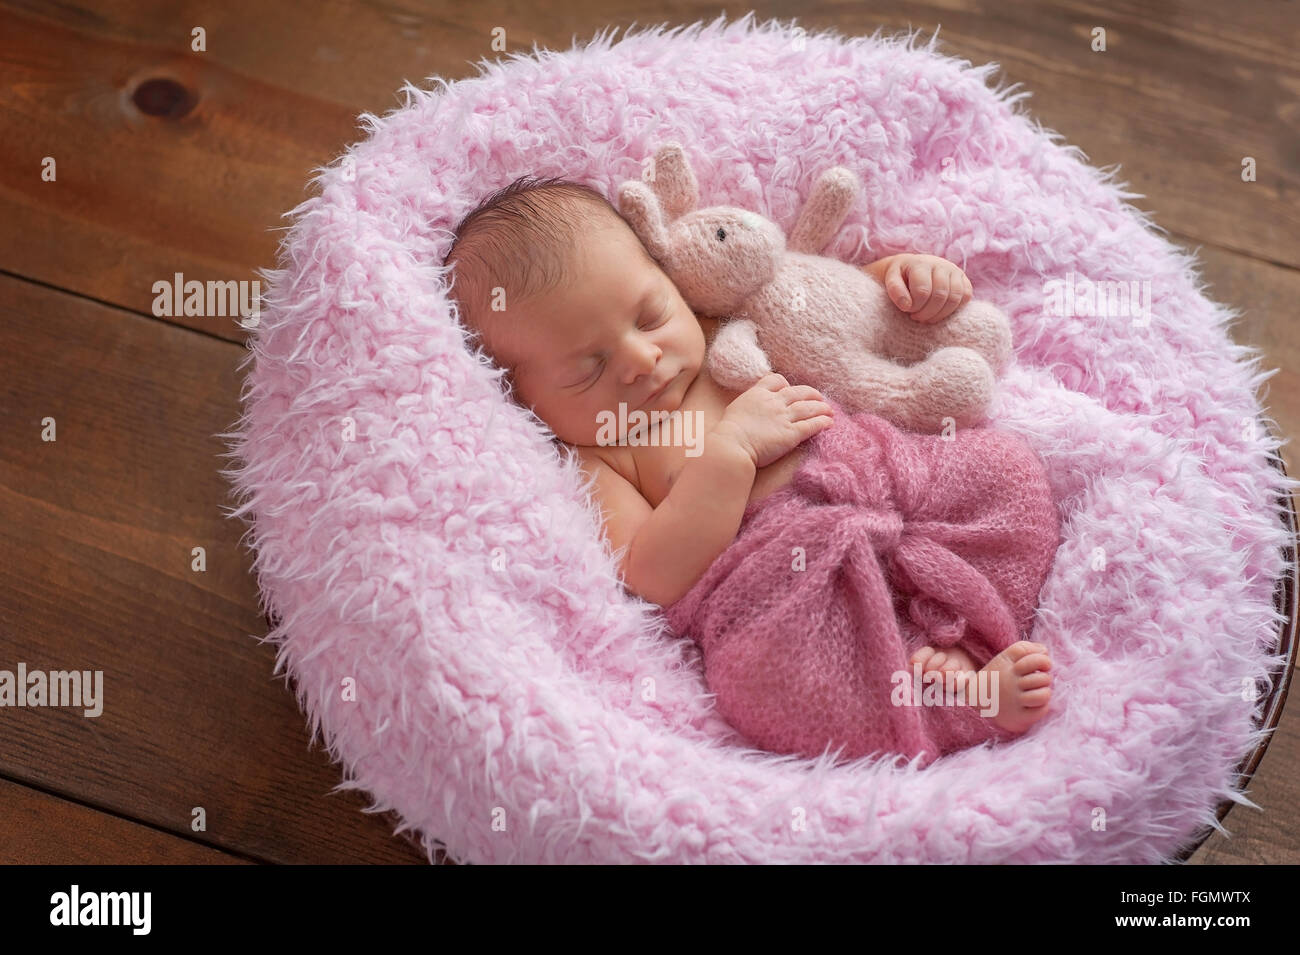 Newborn Baby Girl Sleeping with a Stuffed Animal Rabbit Stock Photo